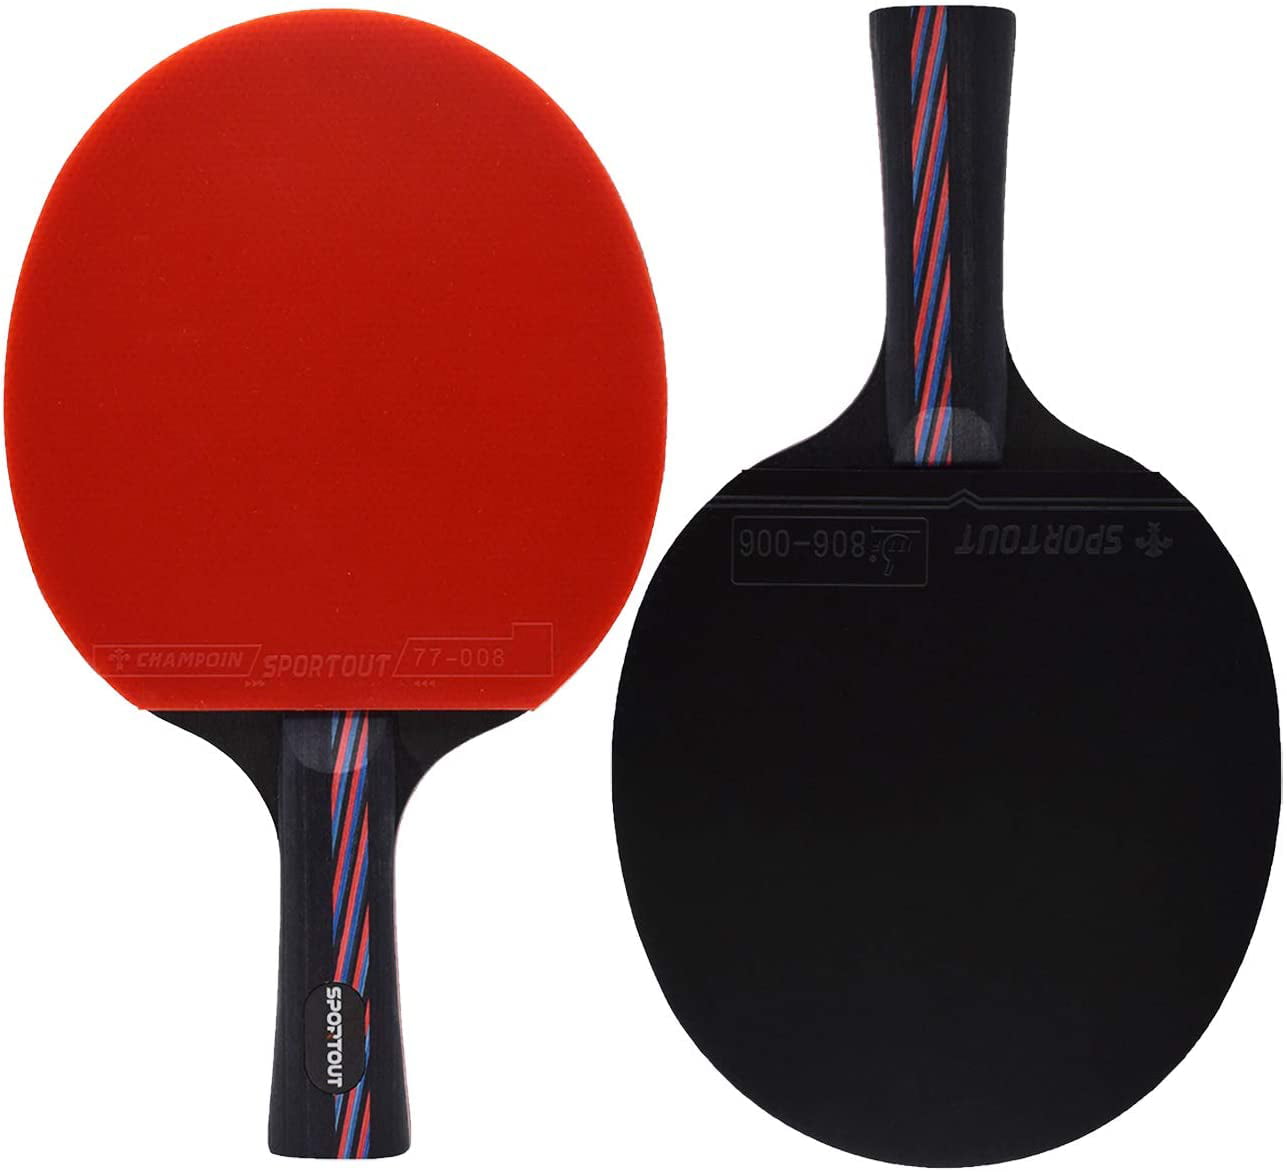 Easyroom Seriver-He Rubber Table Tennis Bat Professional Pingpong Racket Paddle 